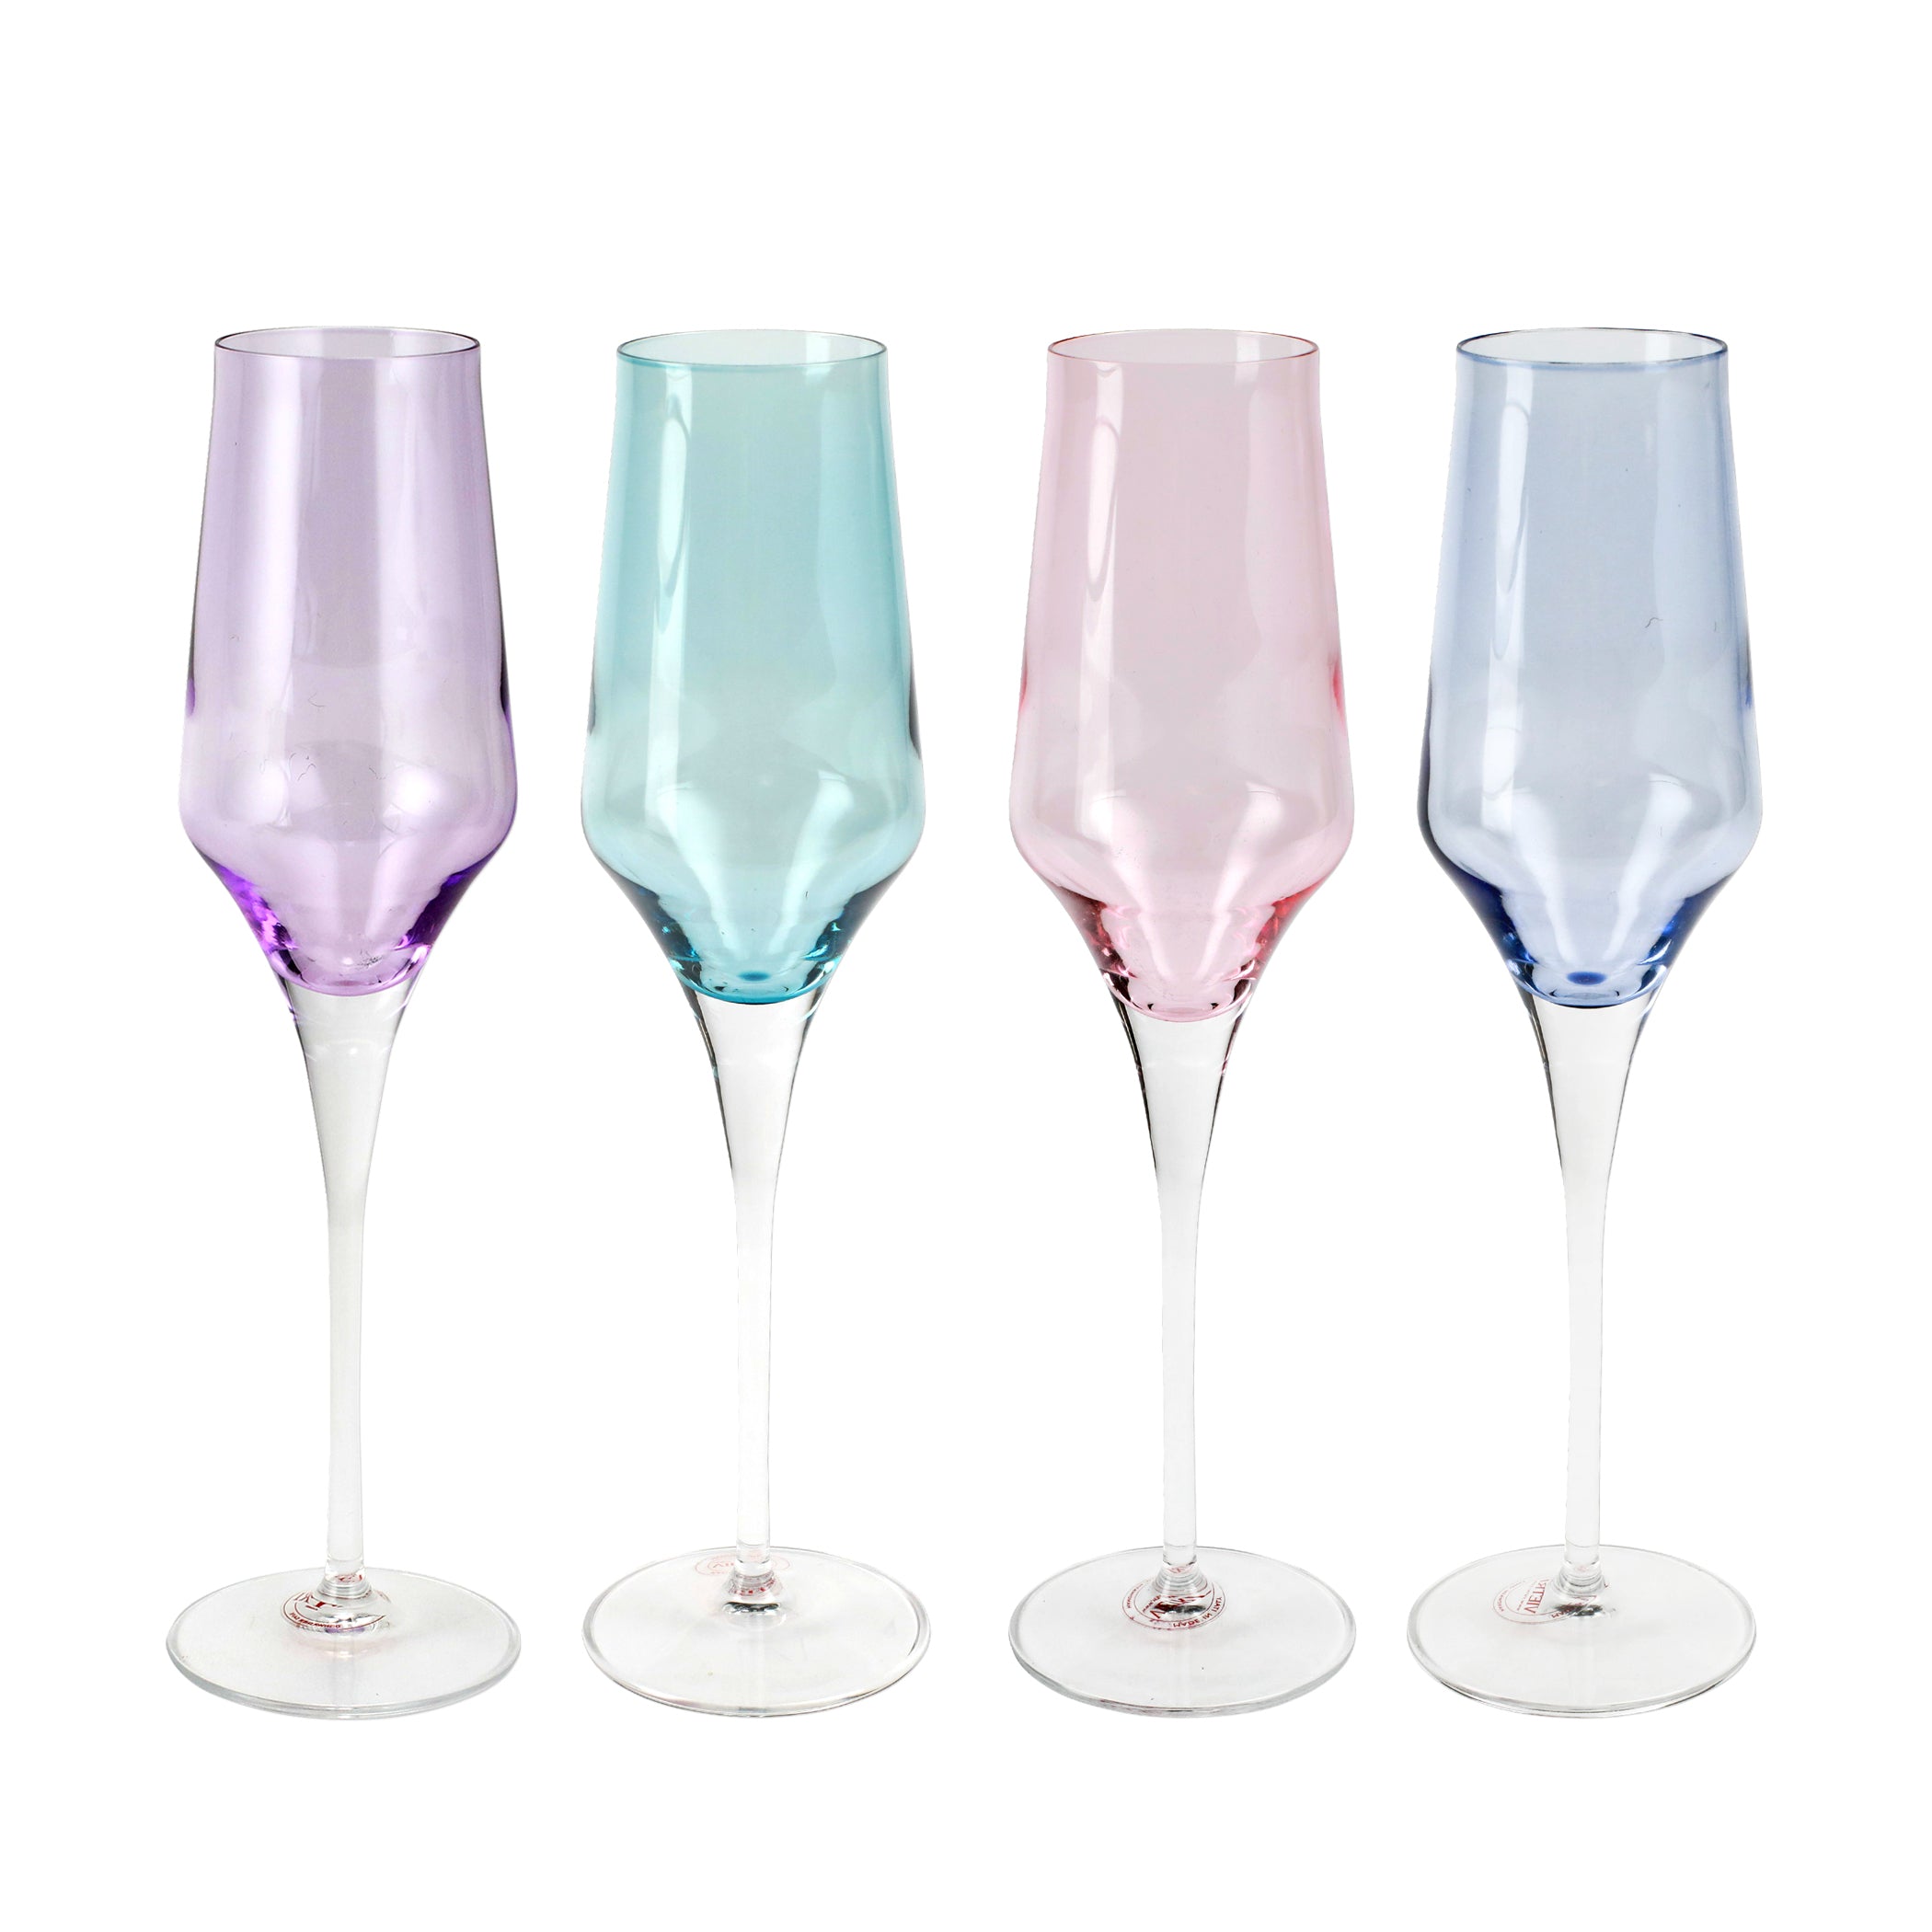 Contessa Assorted Champagne Glasses - Set of 4